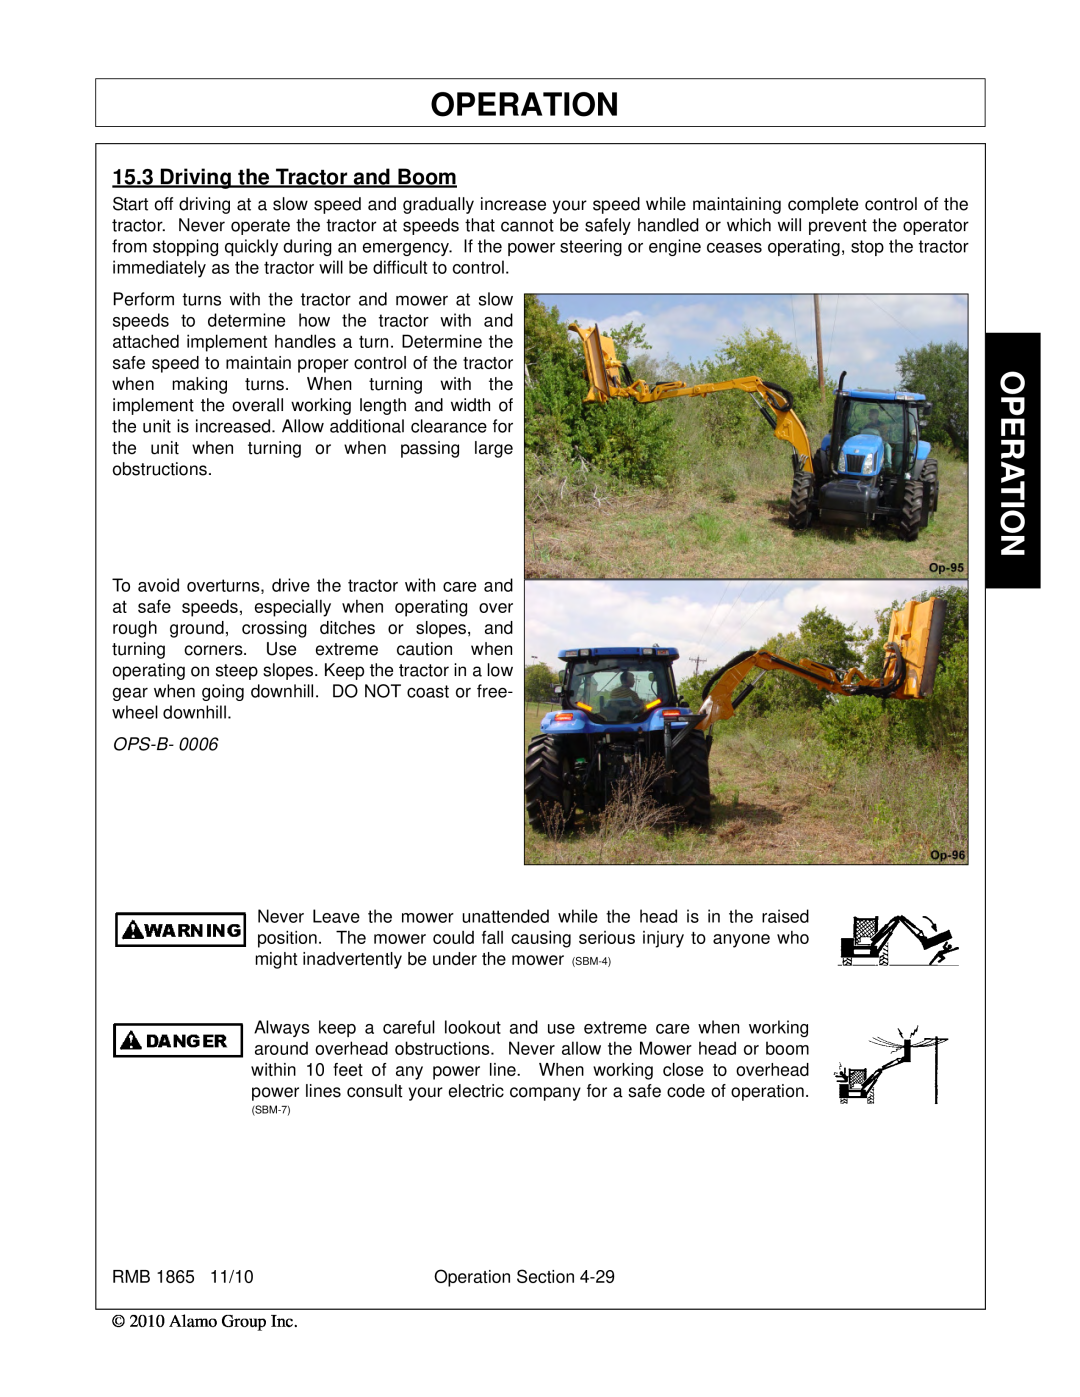 Bush Hog RMB 1865 manual Operation, Driving the Tractor and Boom 